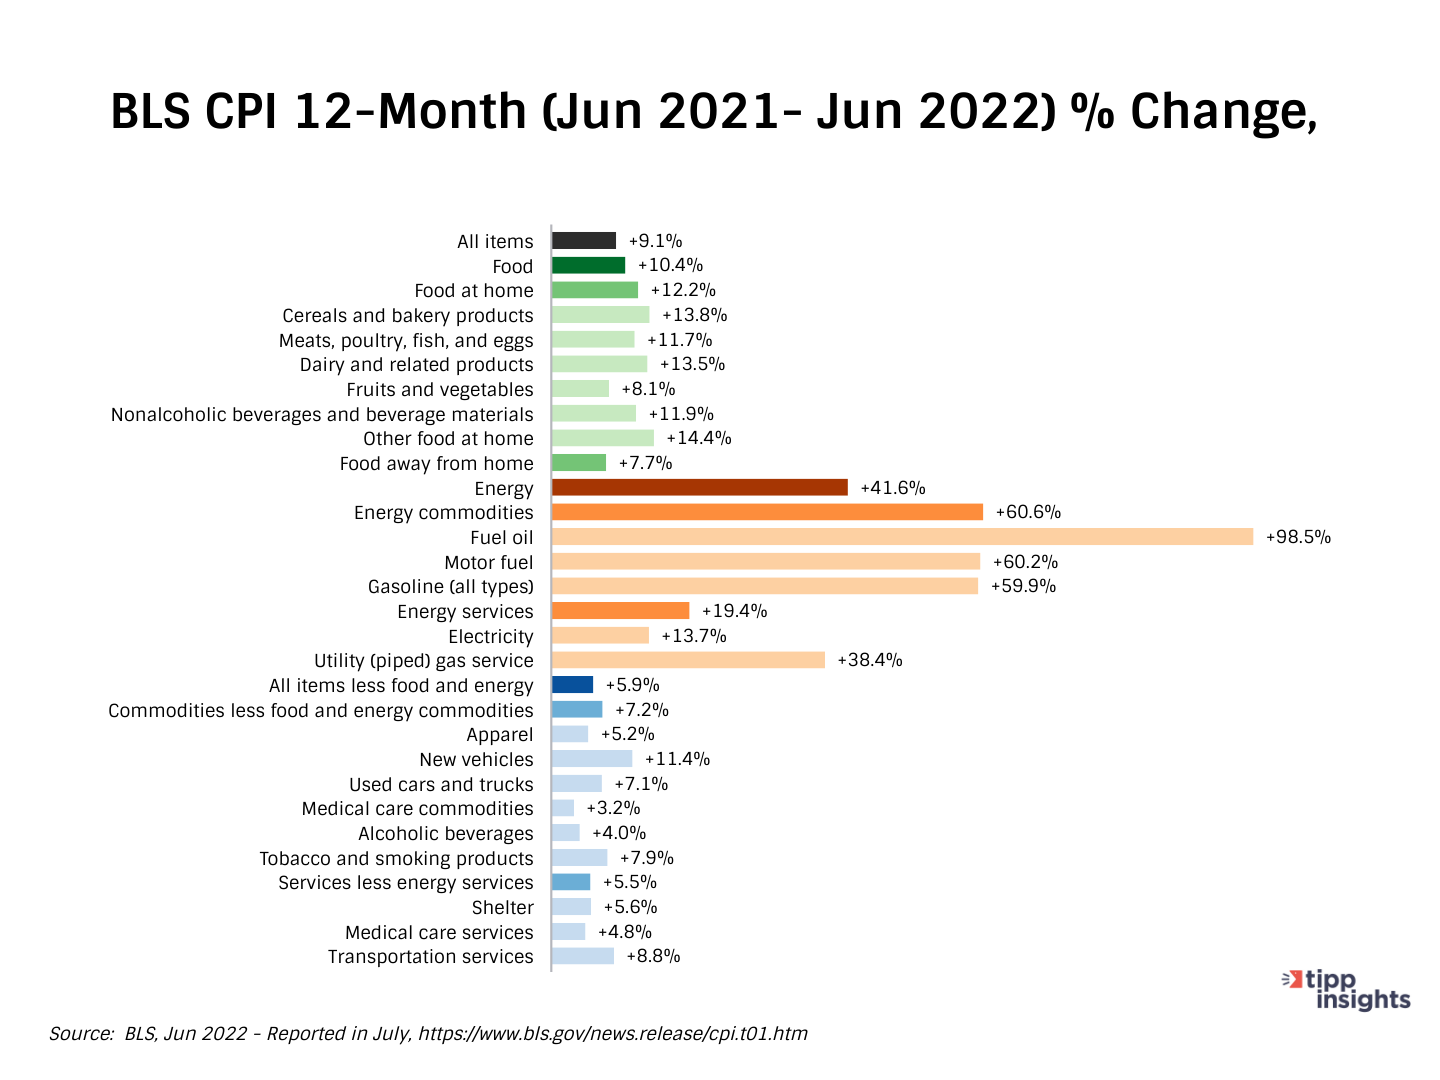 Bureau of Labor Statistics 12 month (june 2021- June 2022) CPI % change